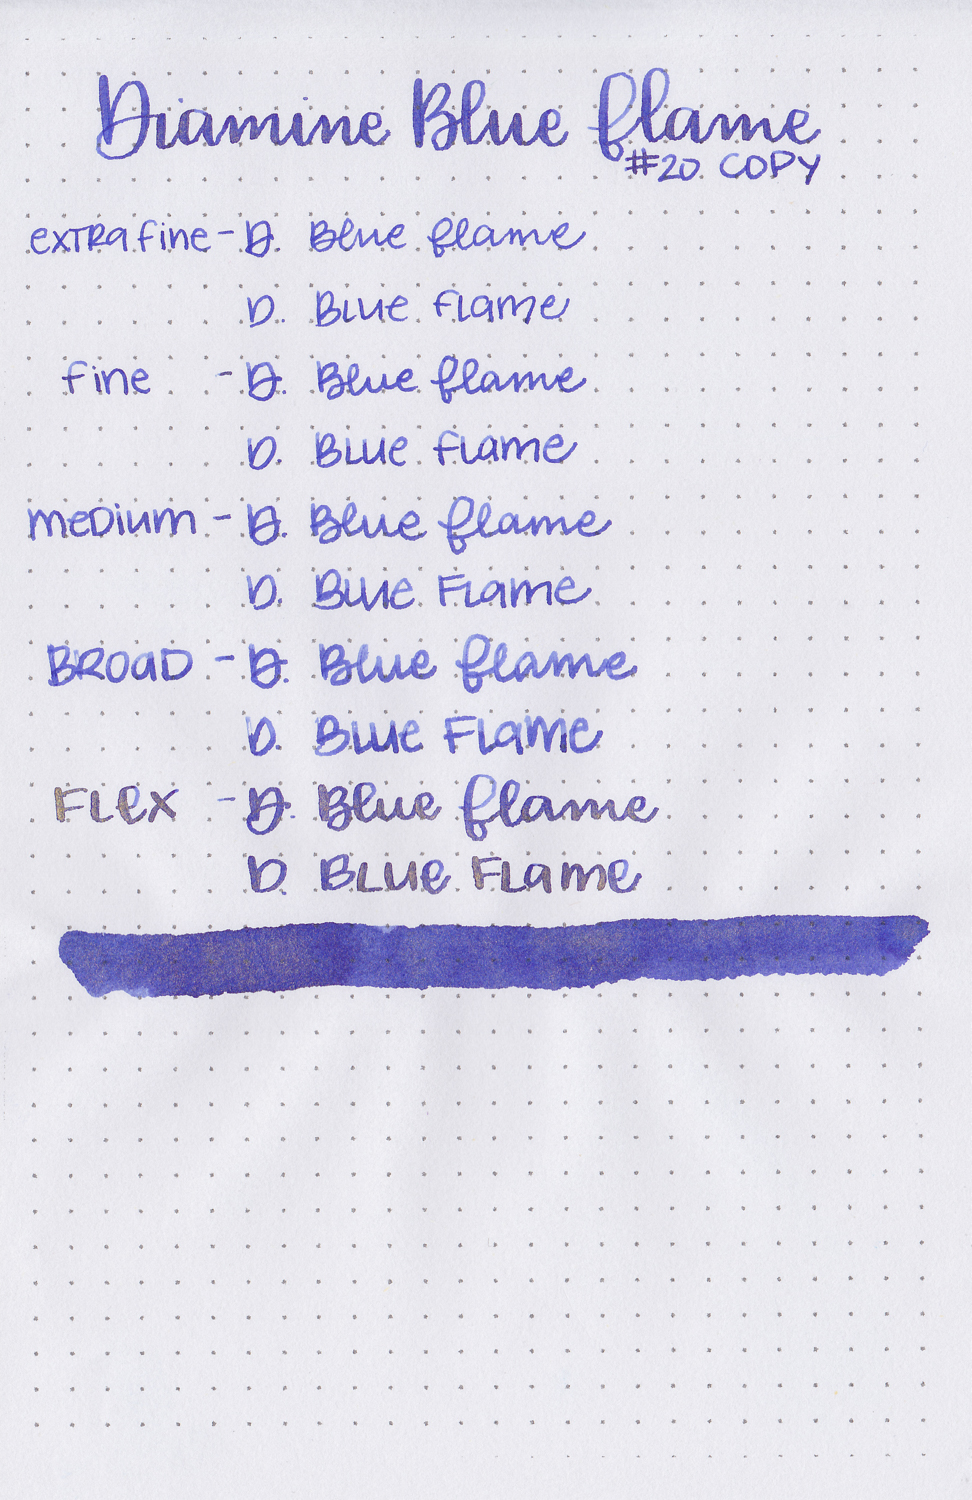 d-blue-flame-9.jpg